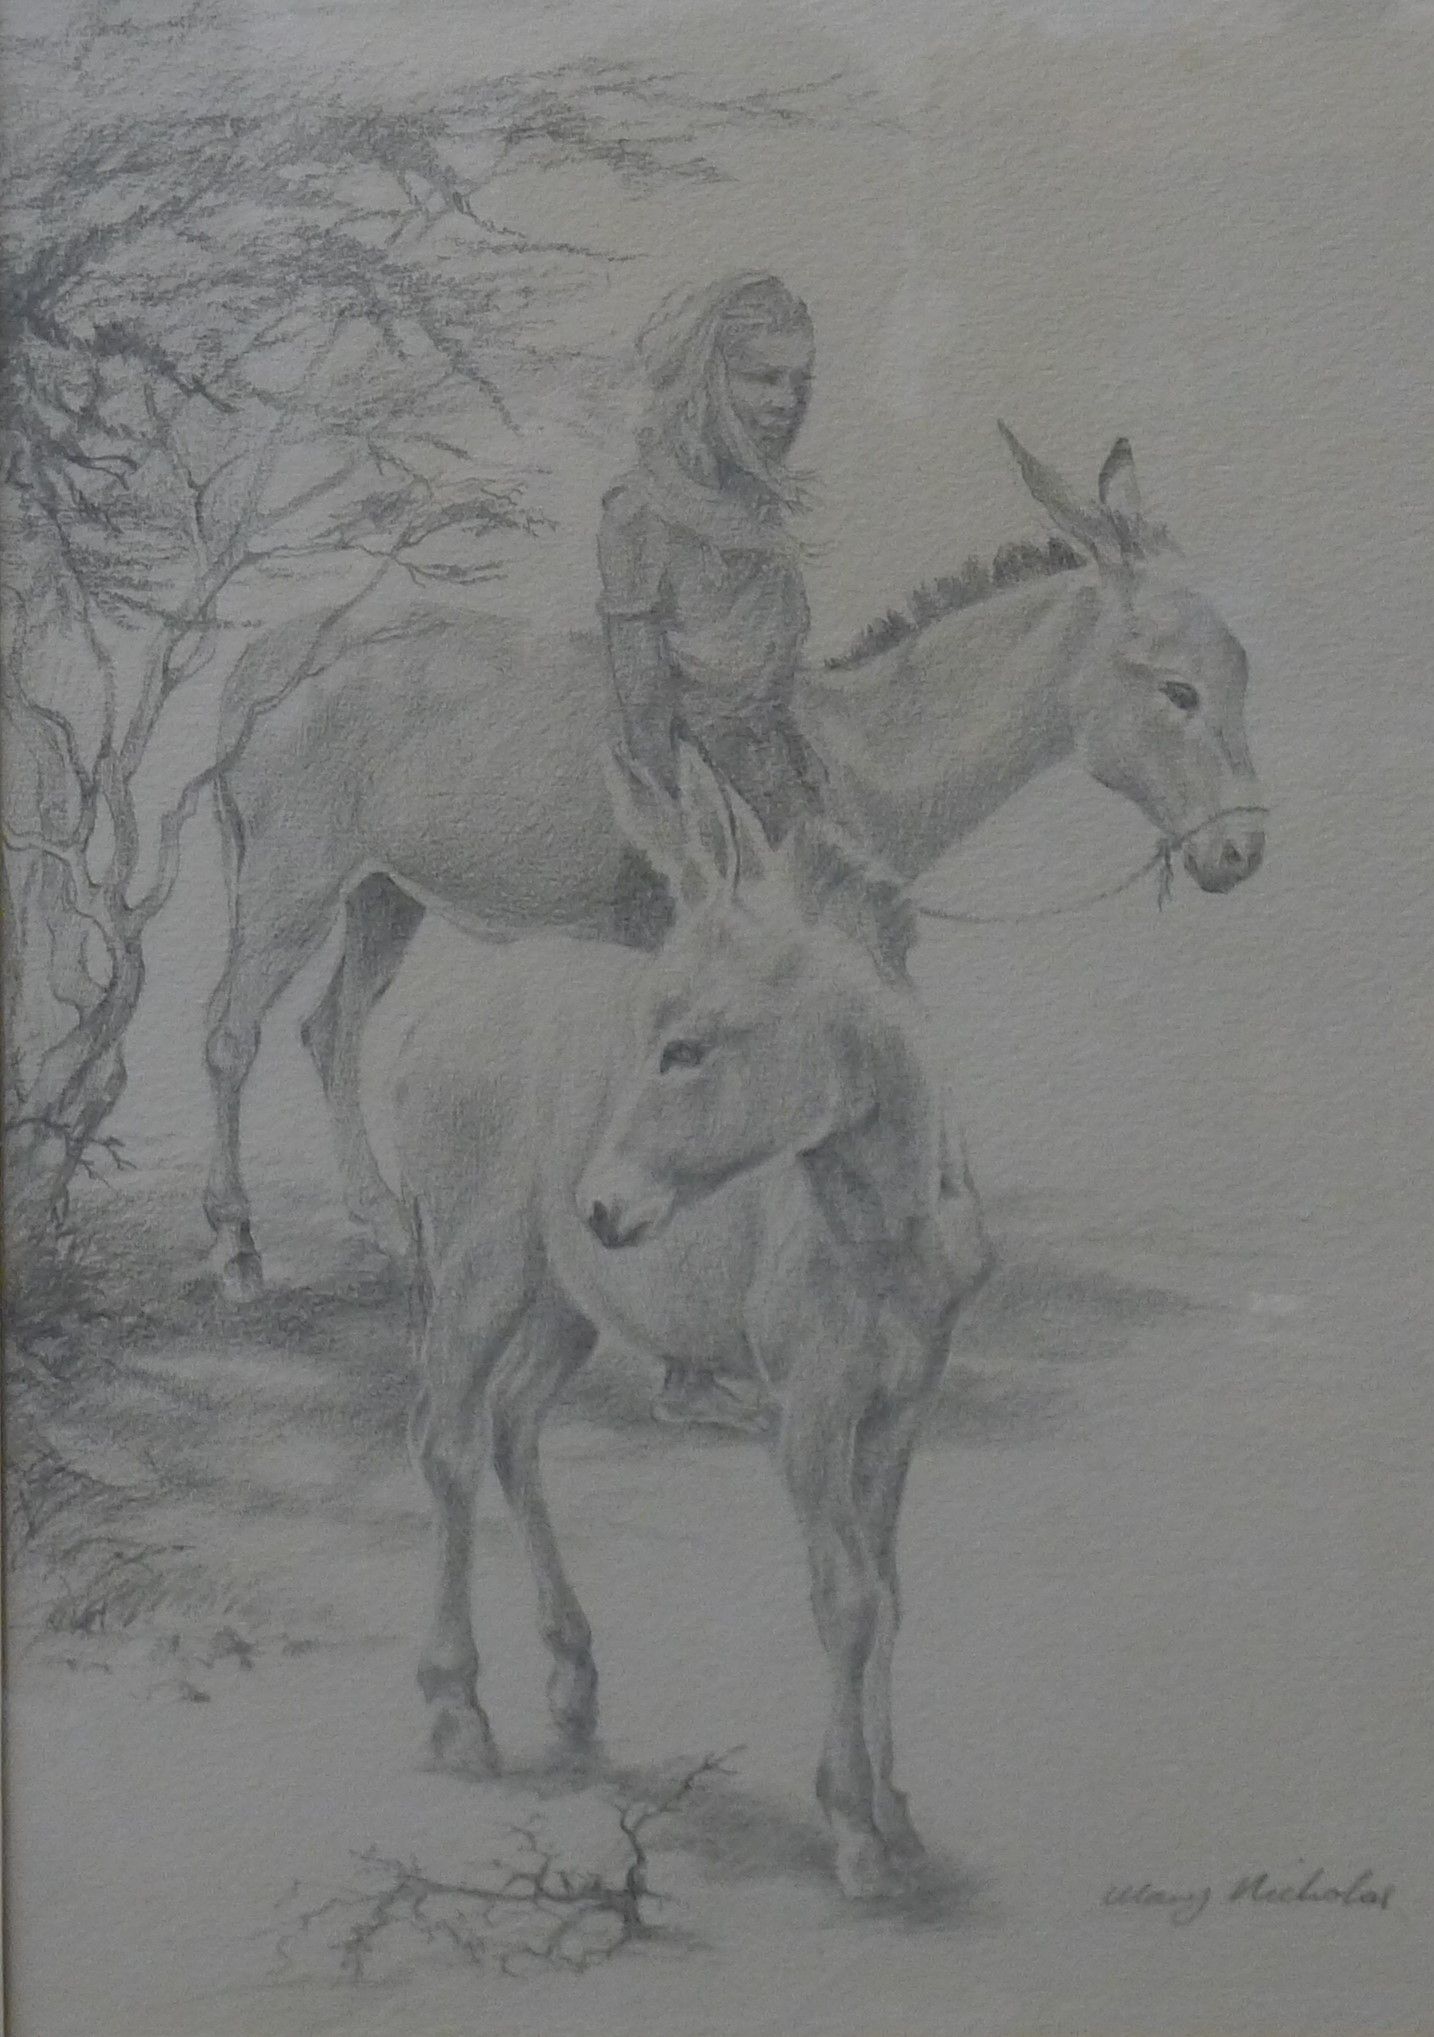 MARY NICHOLAS, Woman with Donkeys, pencil, framed and glazed. 30 x 42 cm.